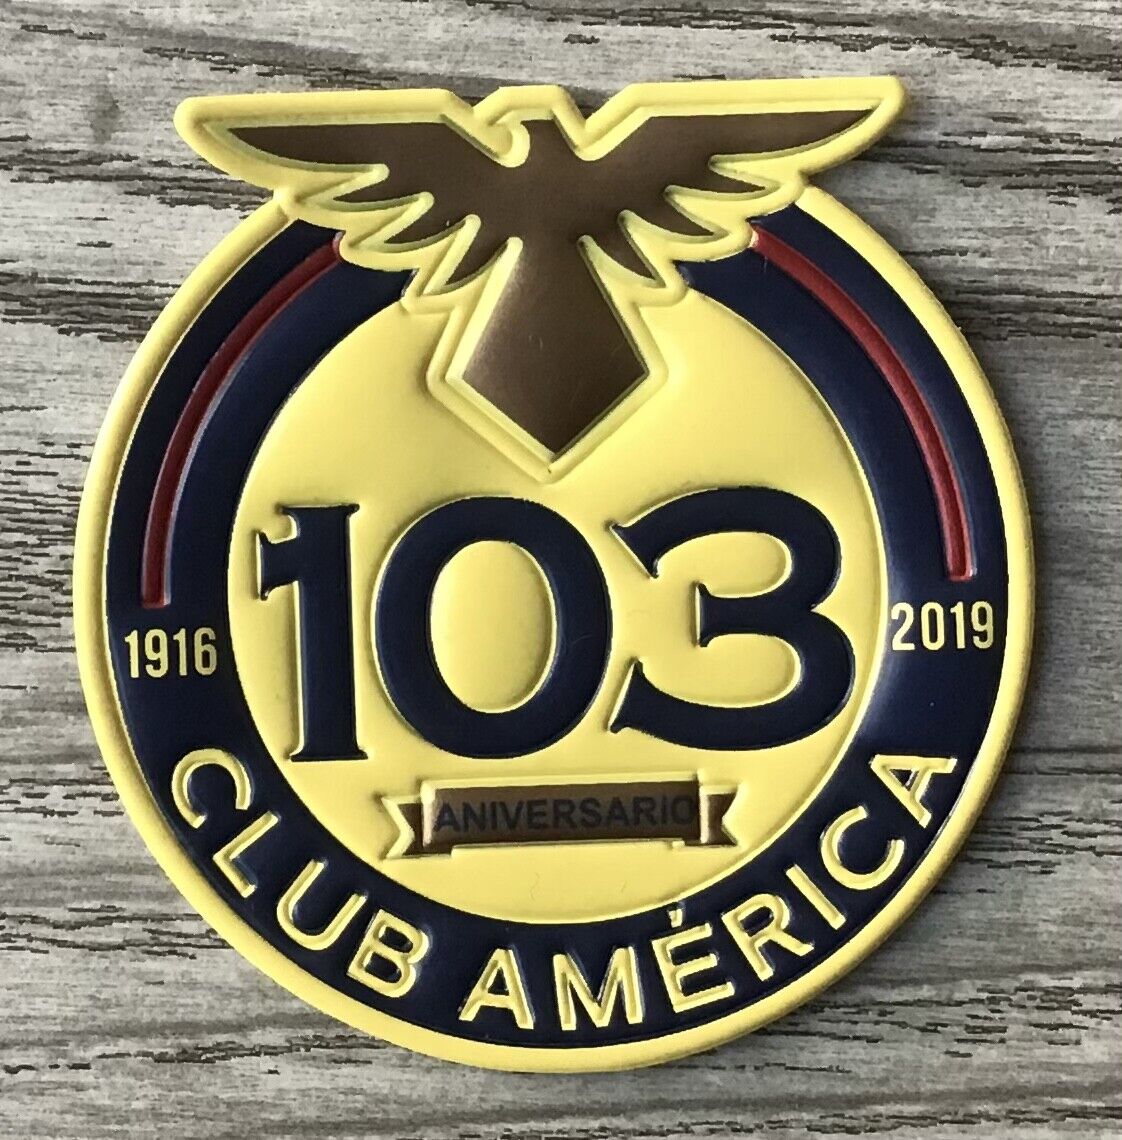 Club America 103/104 Anniversary patches | eBay